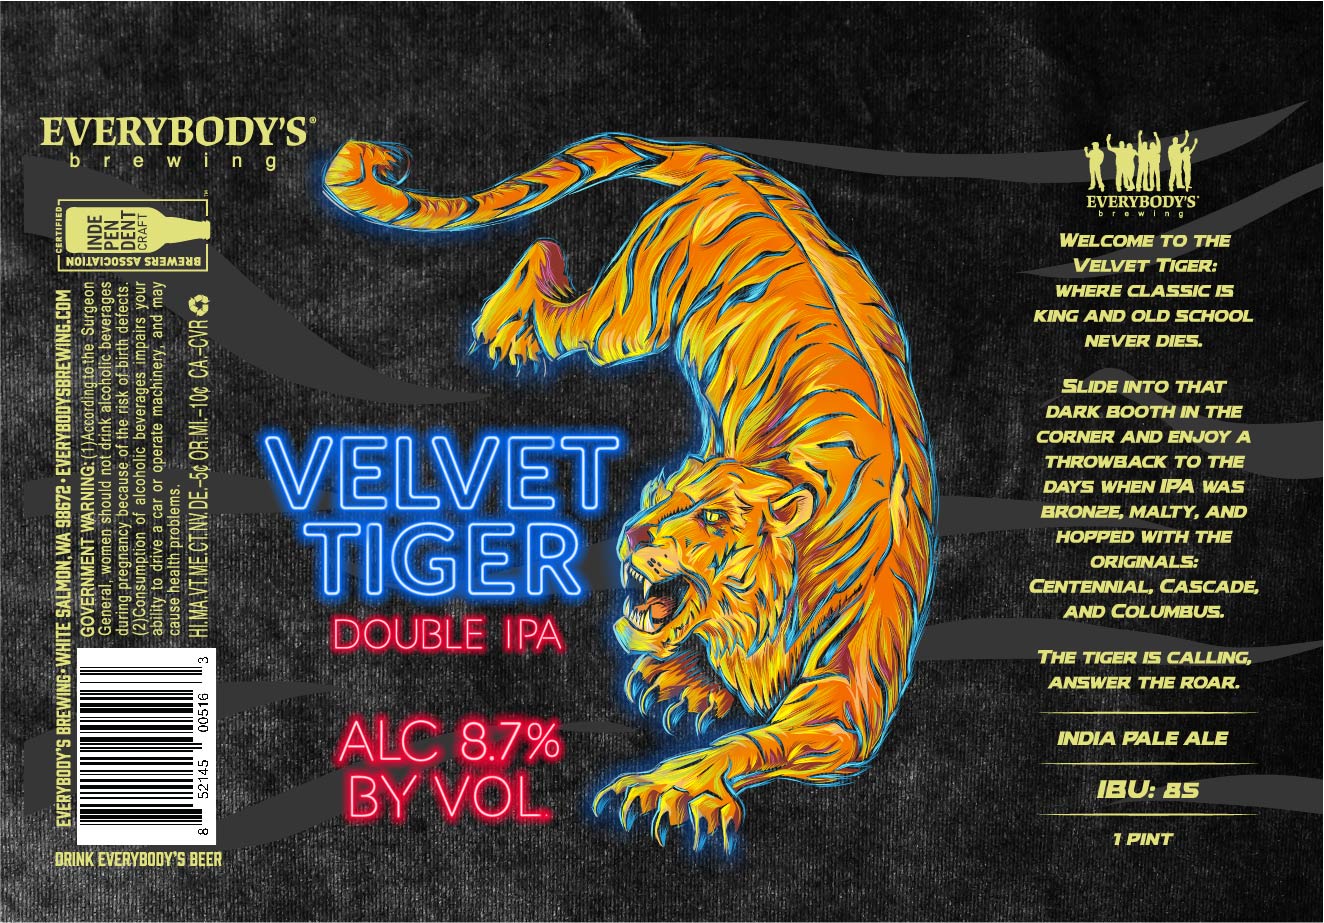 Everybody's Brewing Velvet Tiger Double IPA Label